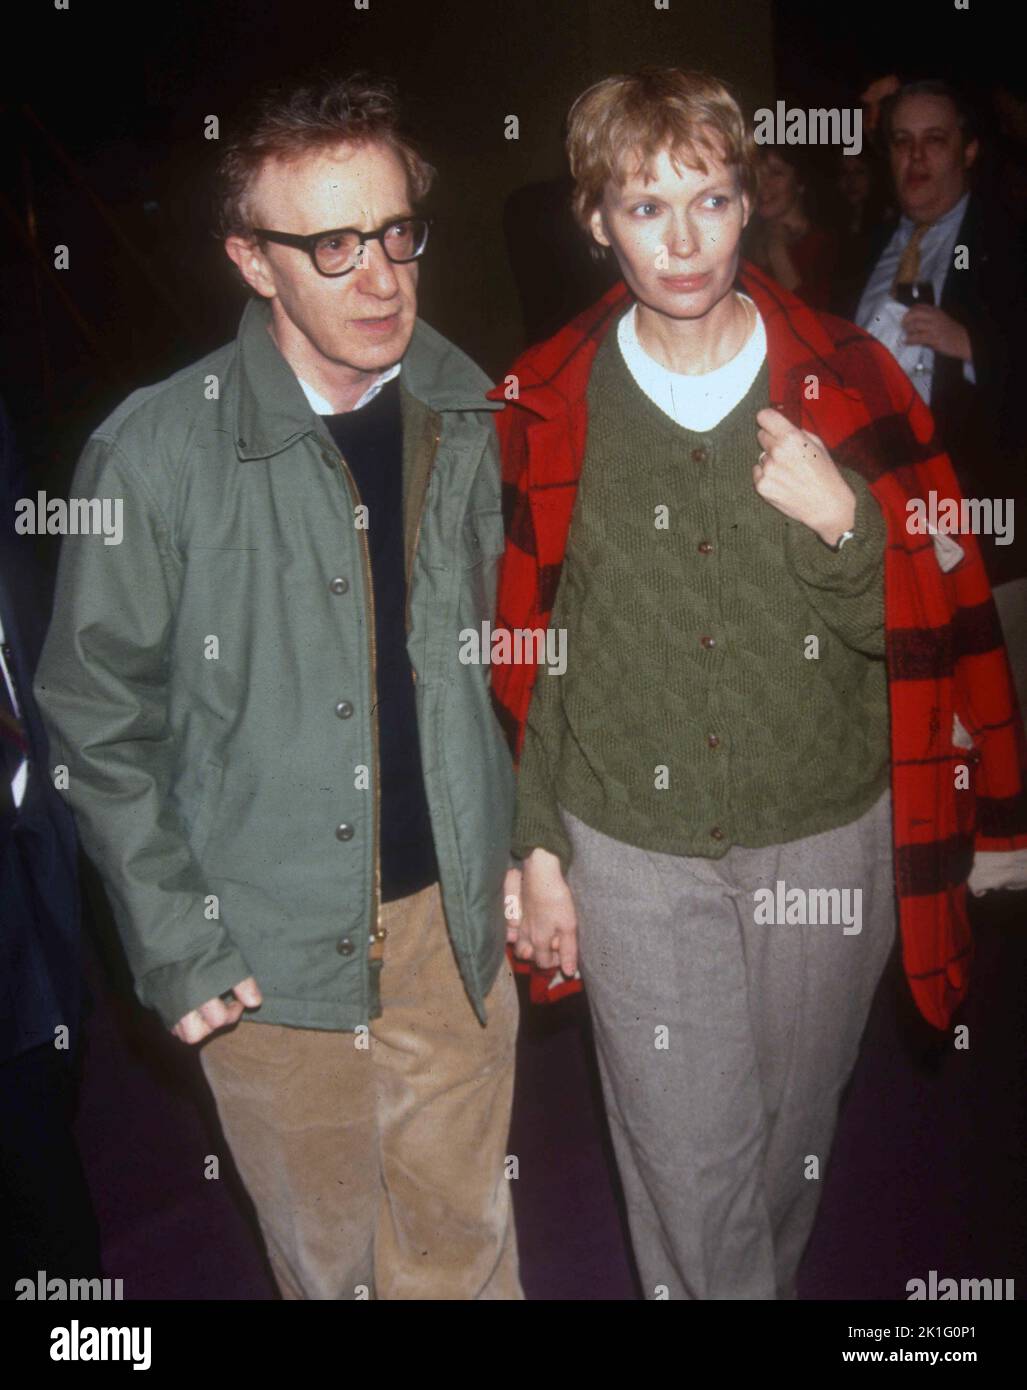 **FOTO FILE** Woody Allen si ritira da Filmmaking. Woody Allen mia Farrow 1982 Foto di Adam Scull-PHOTOlink.net / MediaPunch Foto Stock